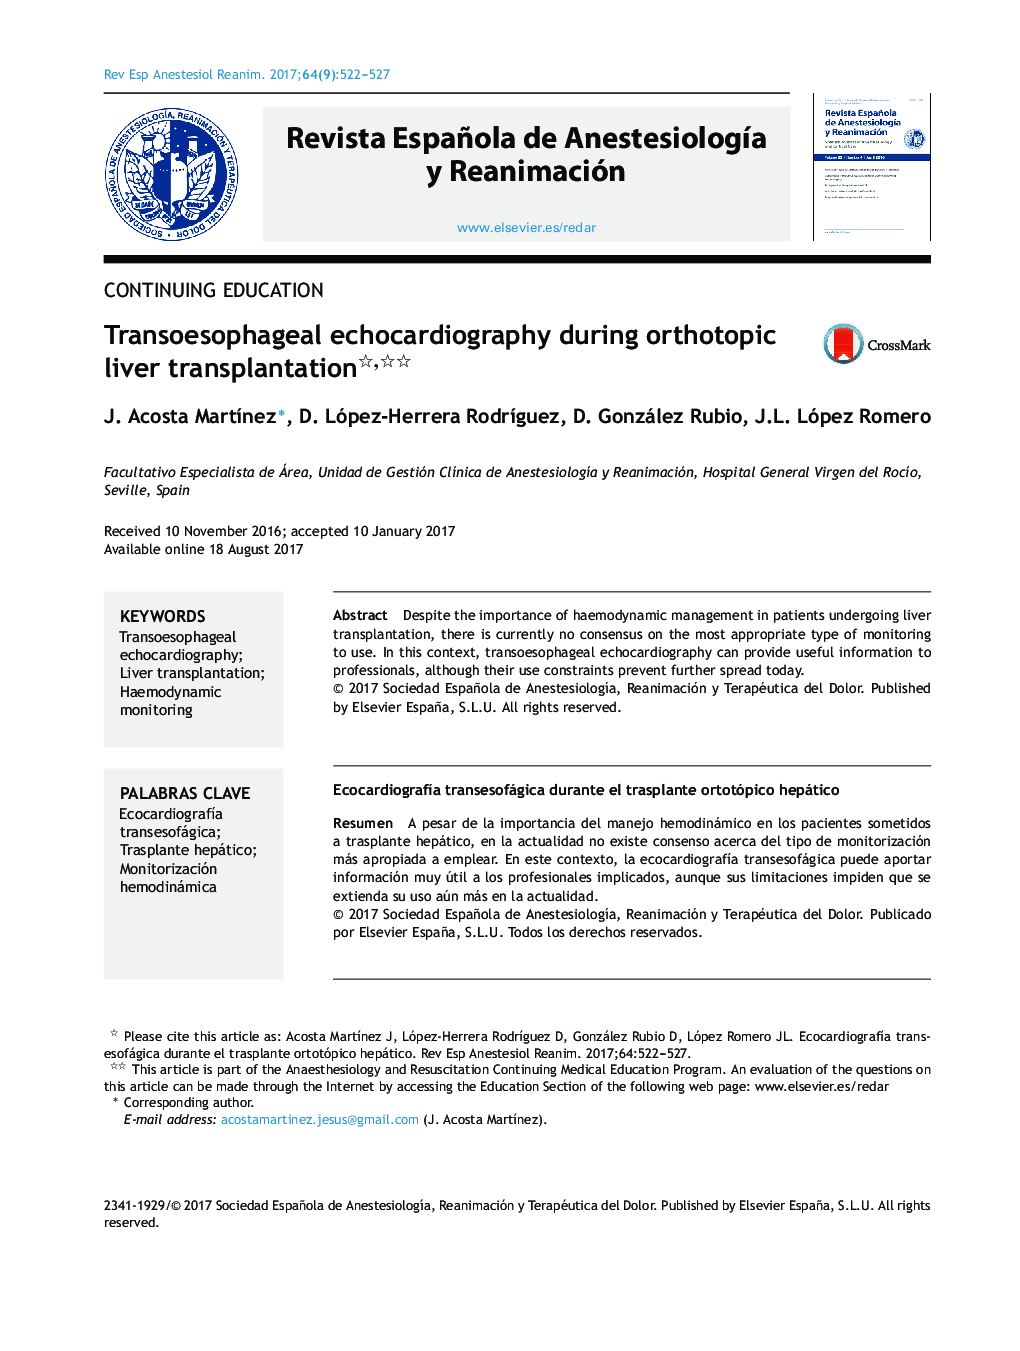 Transoesophageal echocardiography during orthotopic liver transplantation